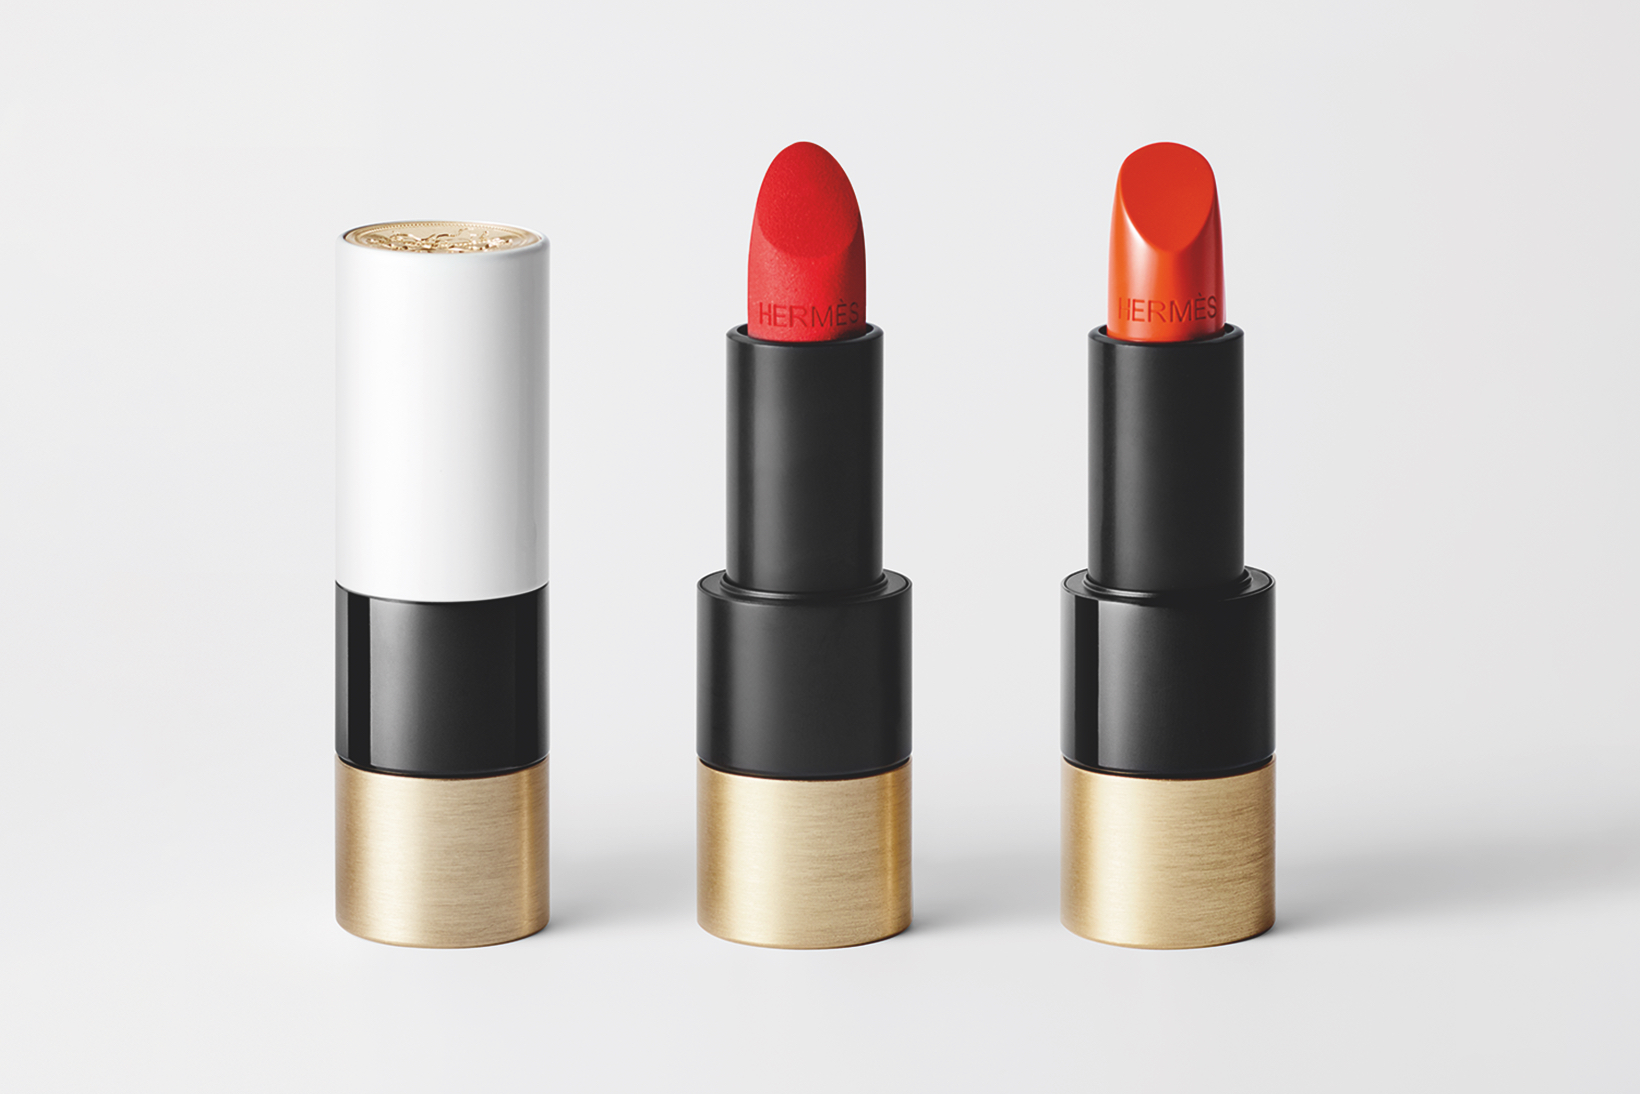 Hermès Beauty Rouge Lipstick Collection